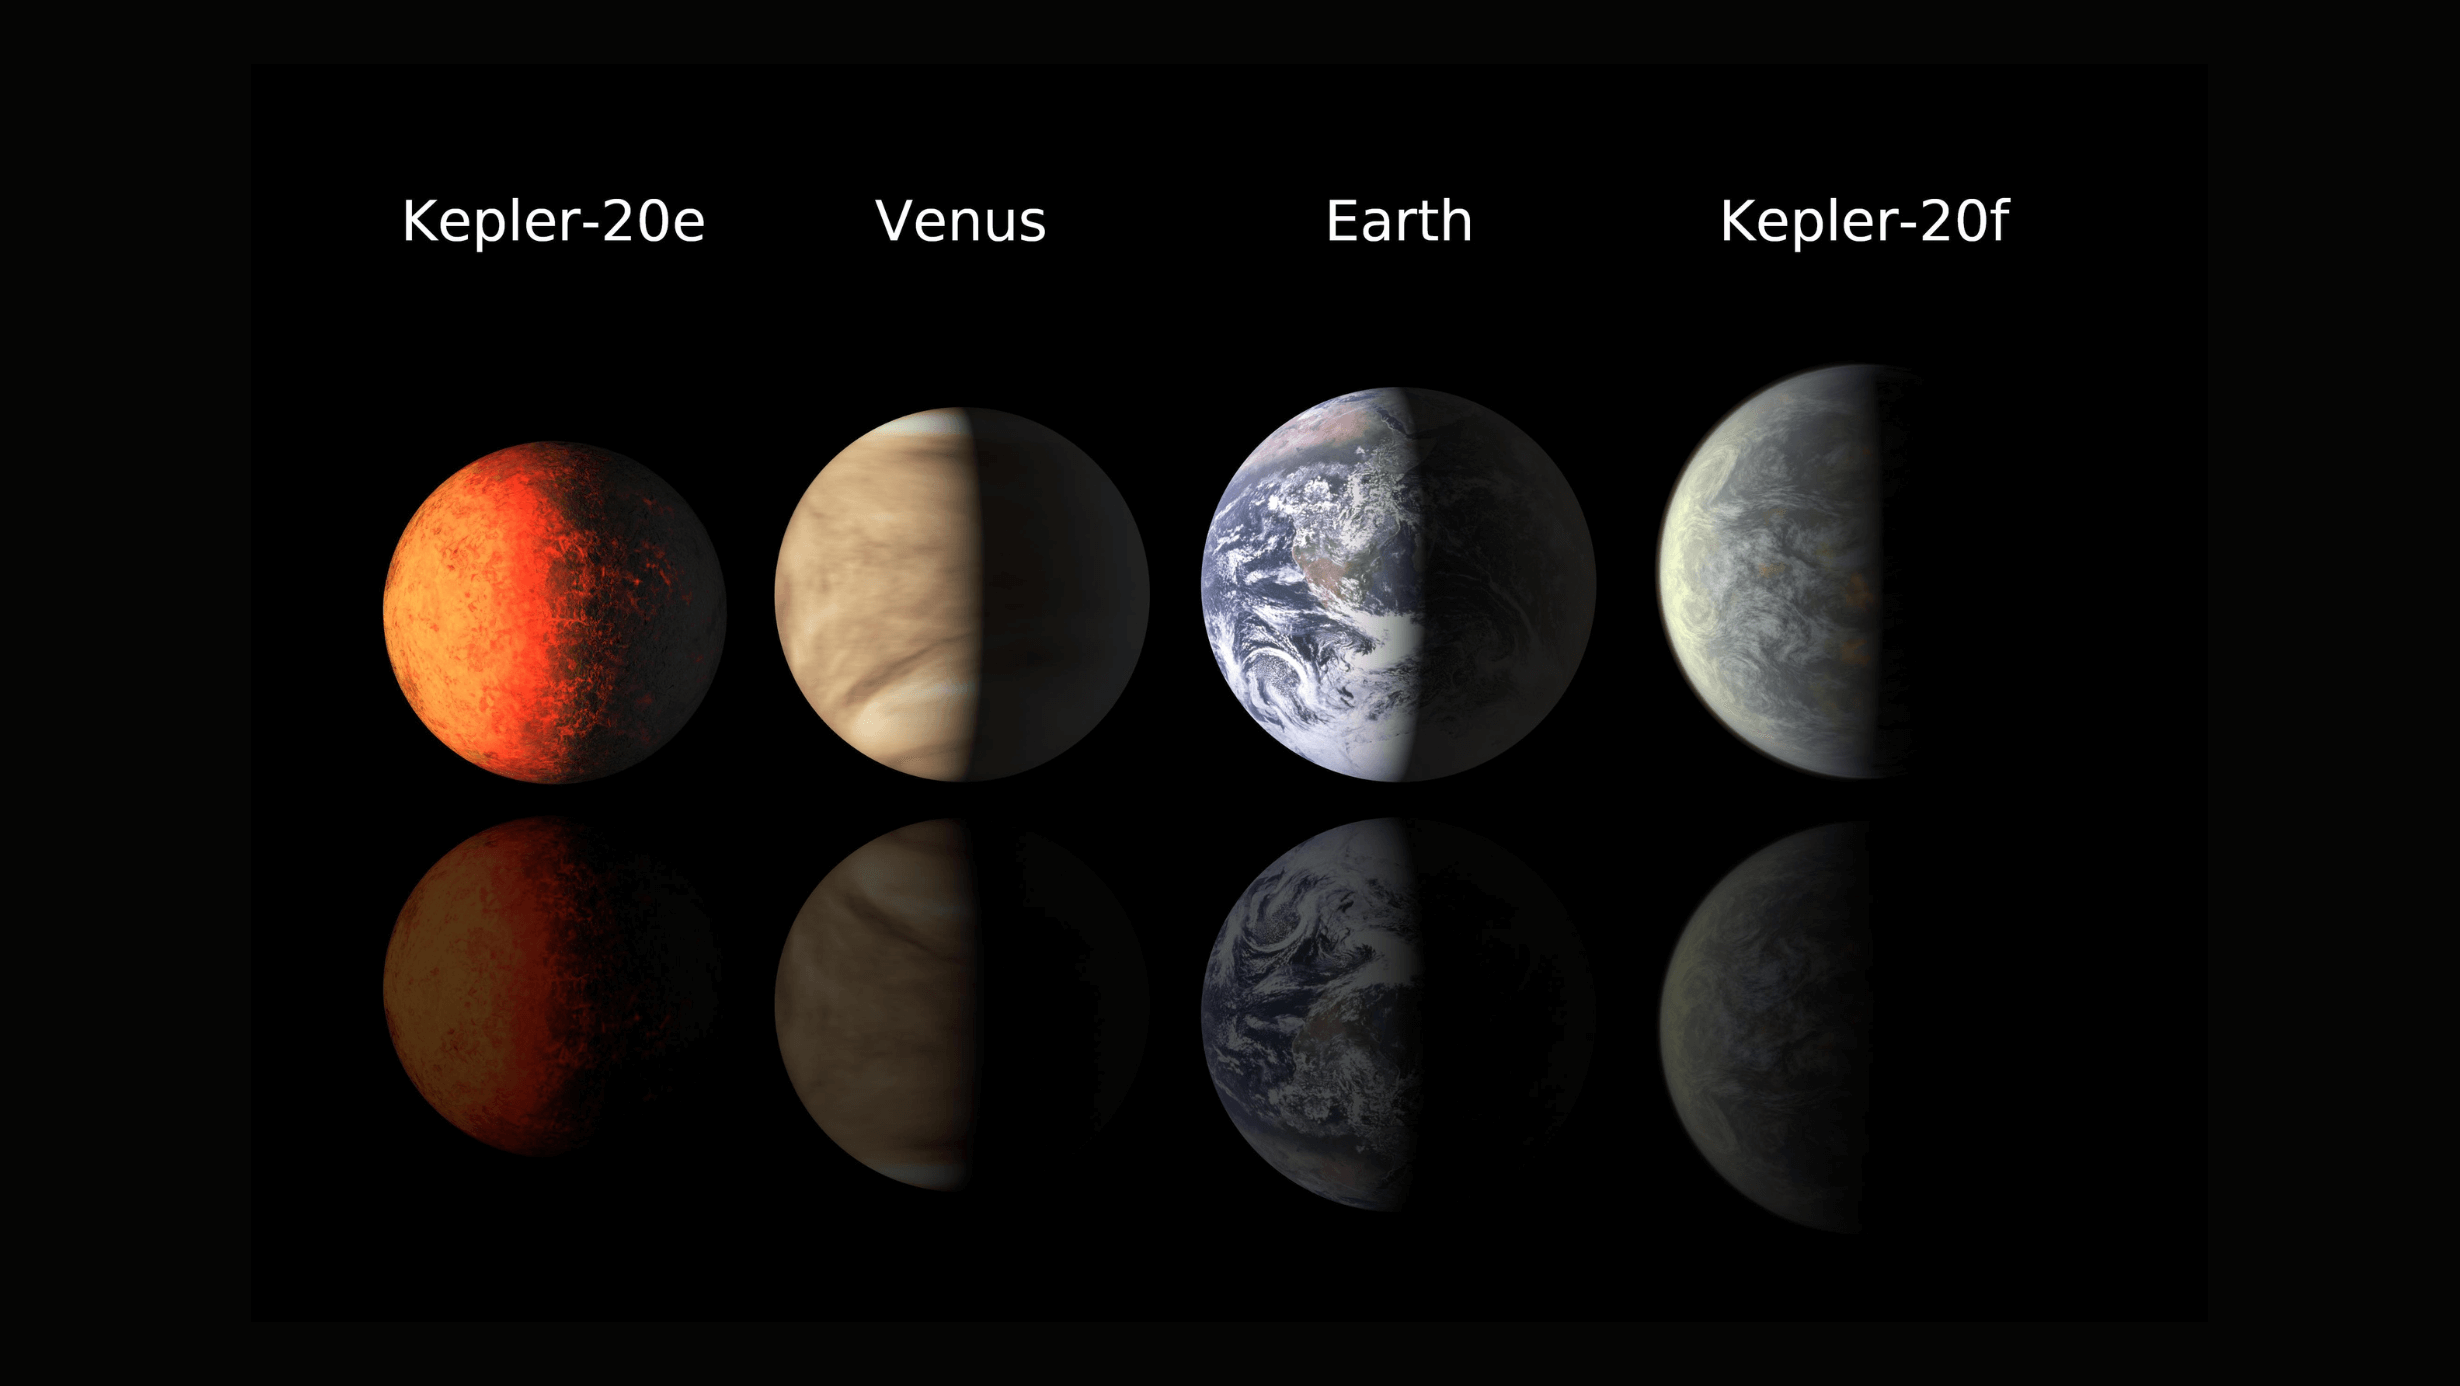 Earth venus kepler and planets comparison